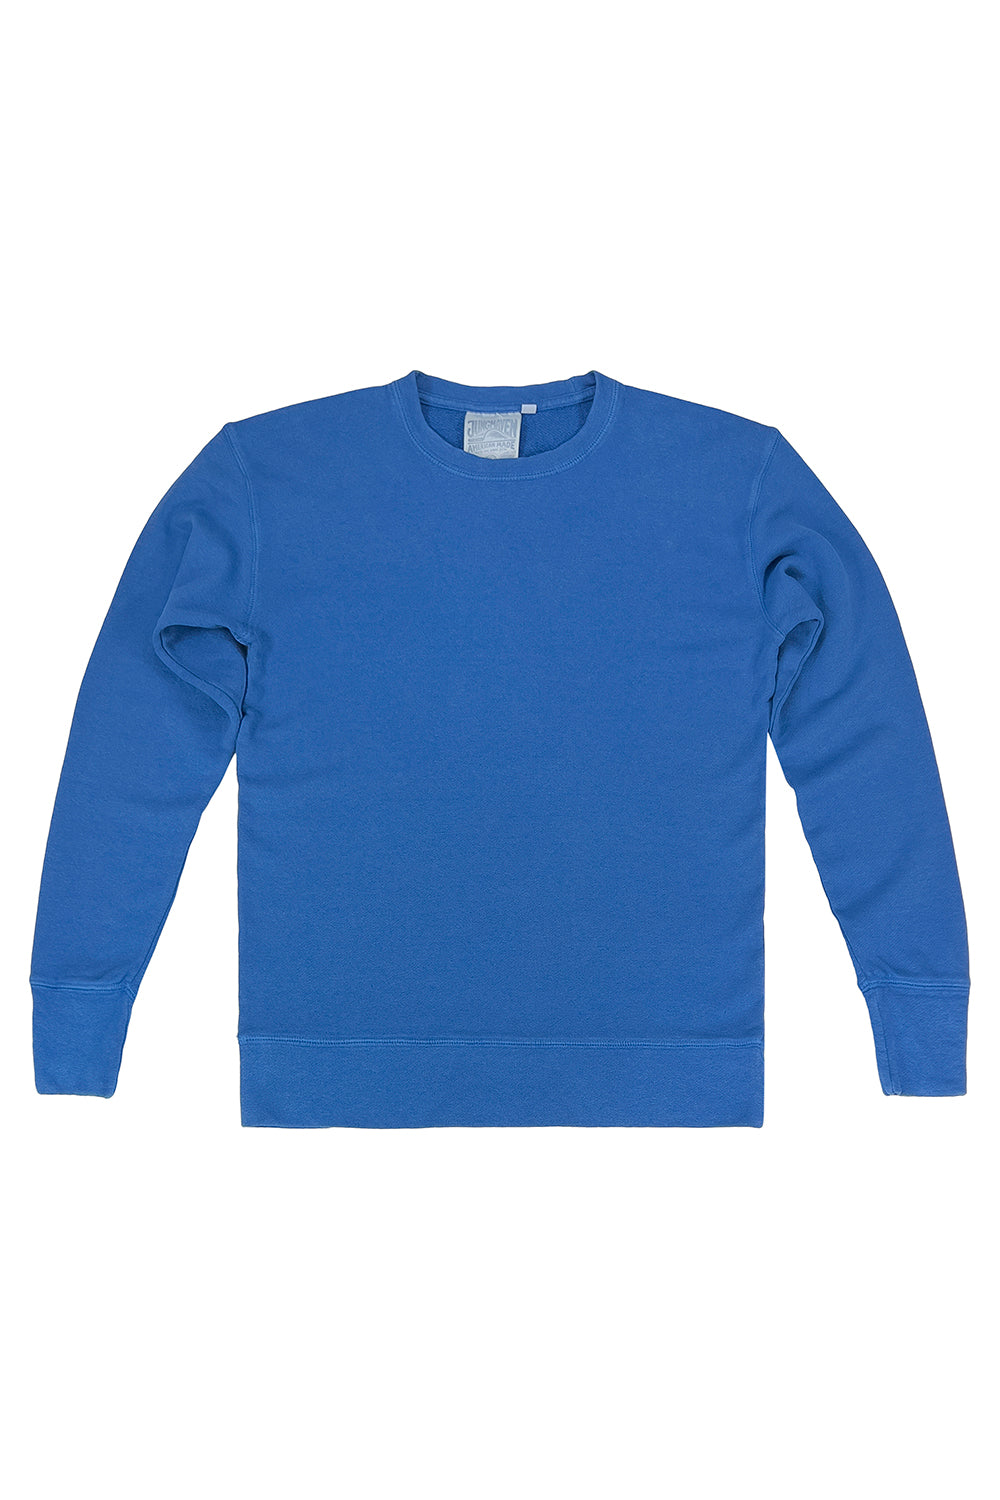 Hemp Tahoe Clothing | Jungmaven Sweatshirt